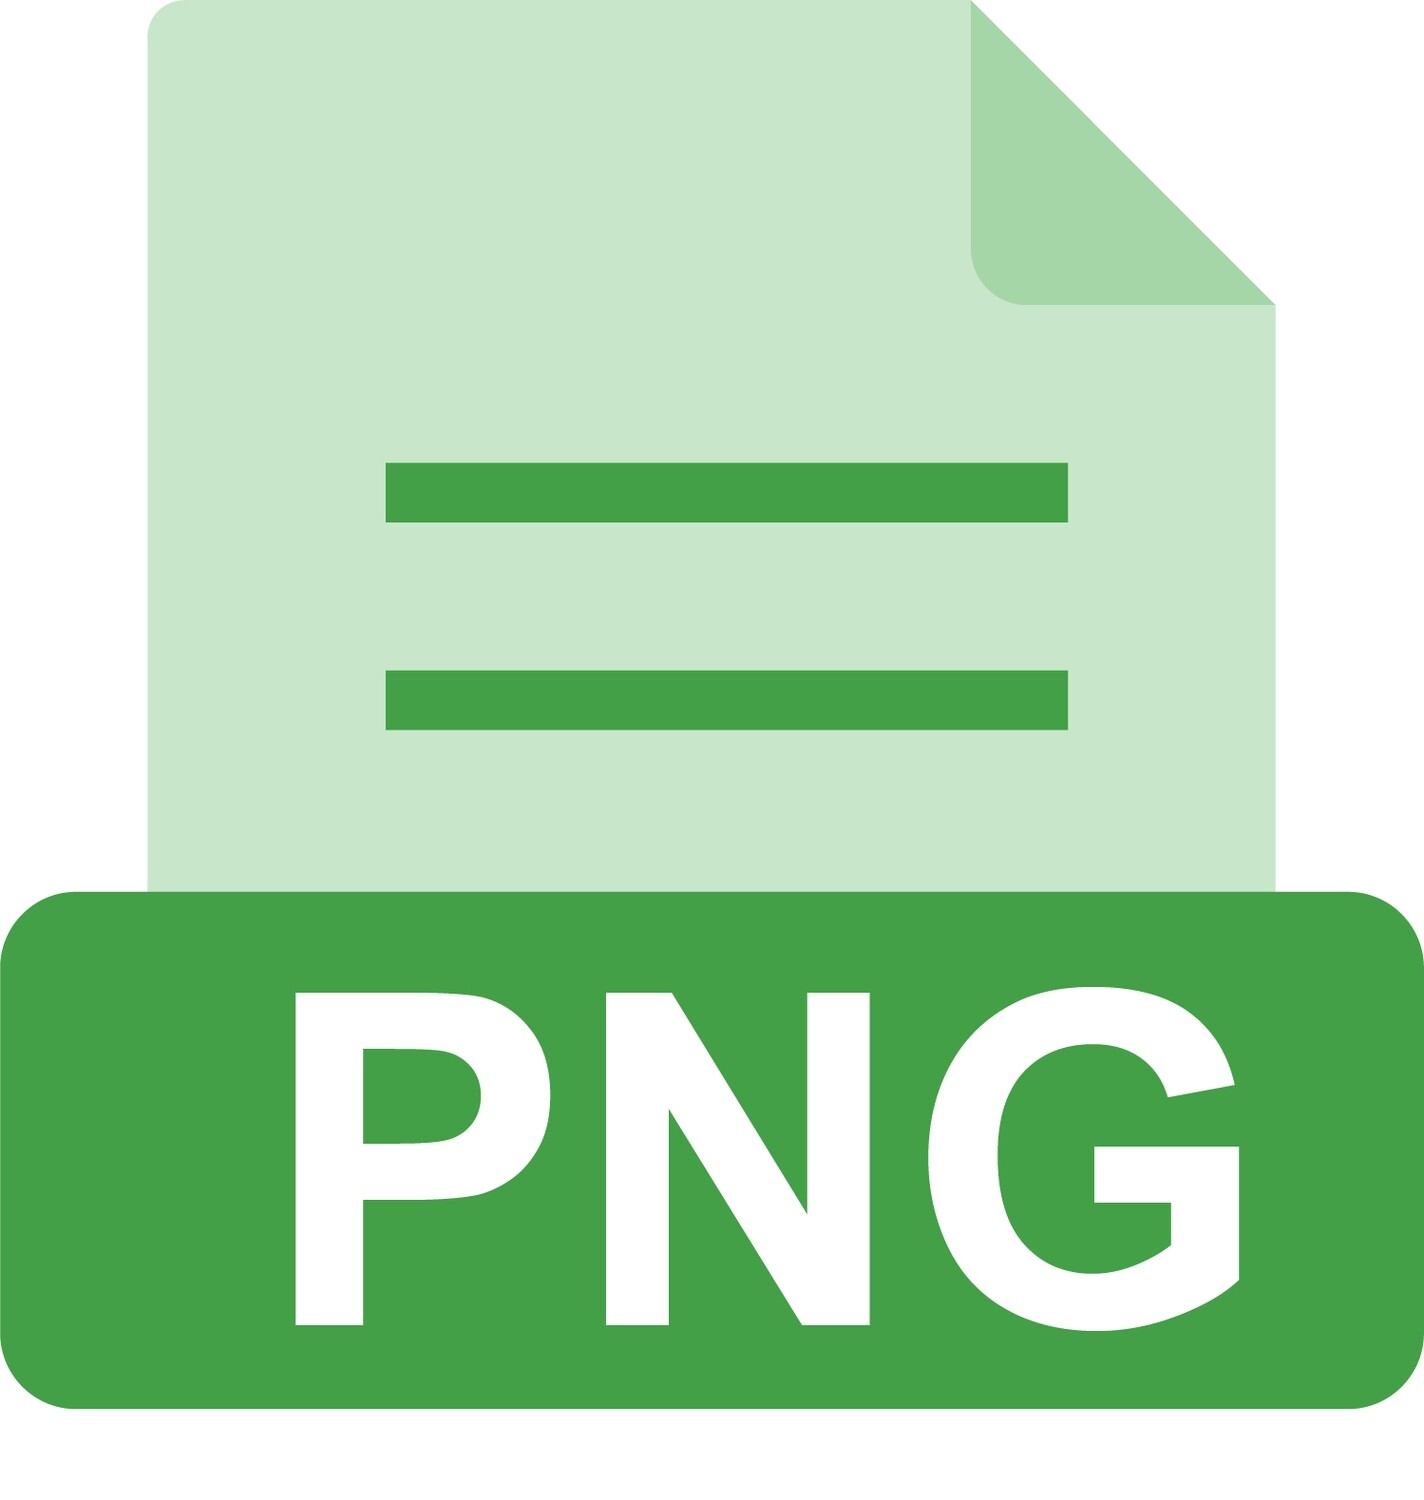 E-File: PNG, PE New Jersey